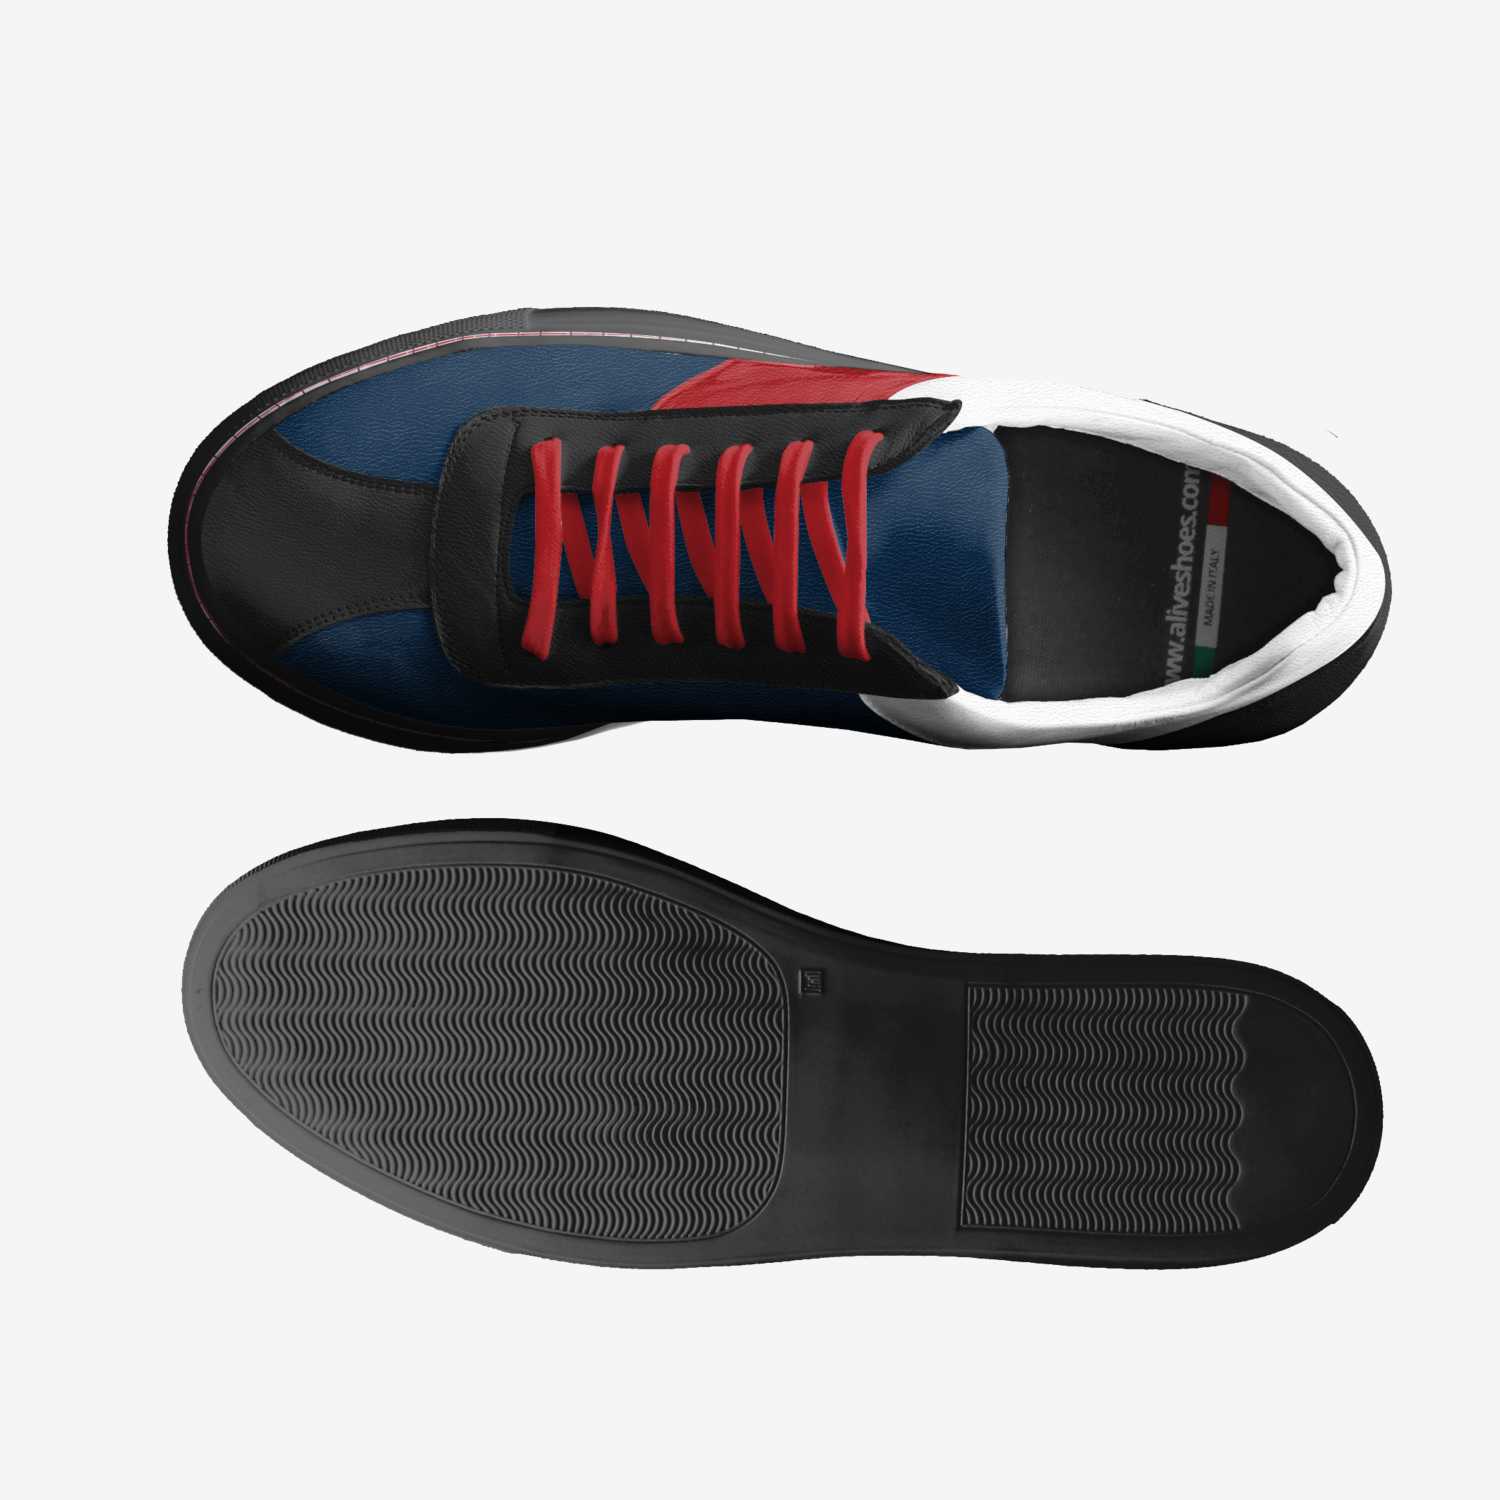 Amerigo | A Custom Shoe concept by Jaden Bouldin-miller